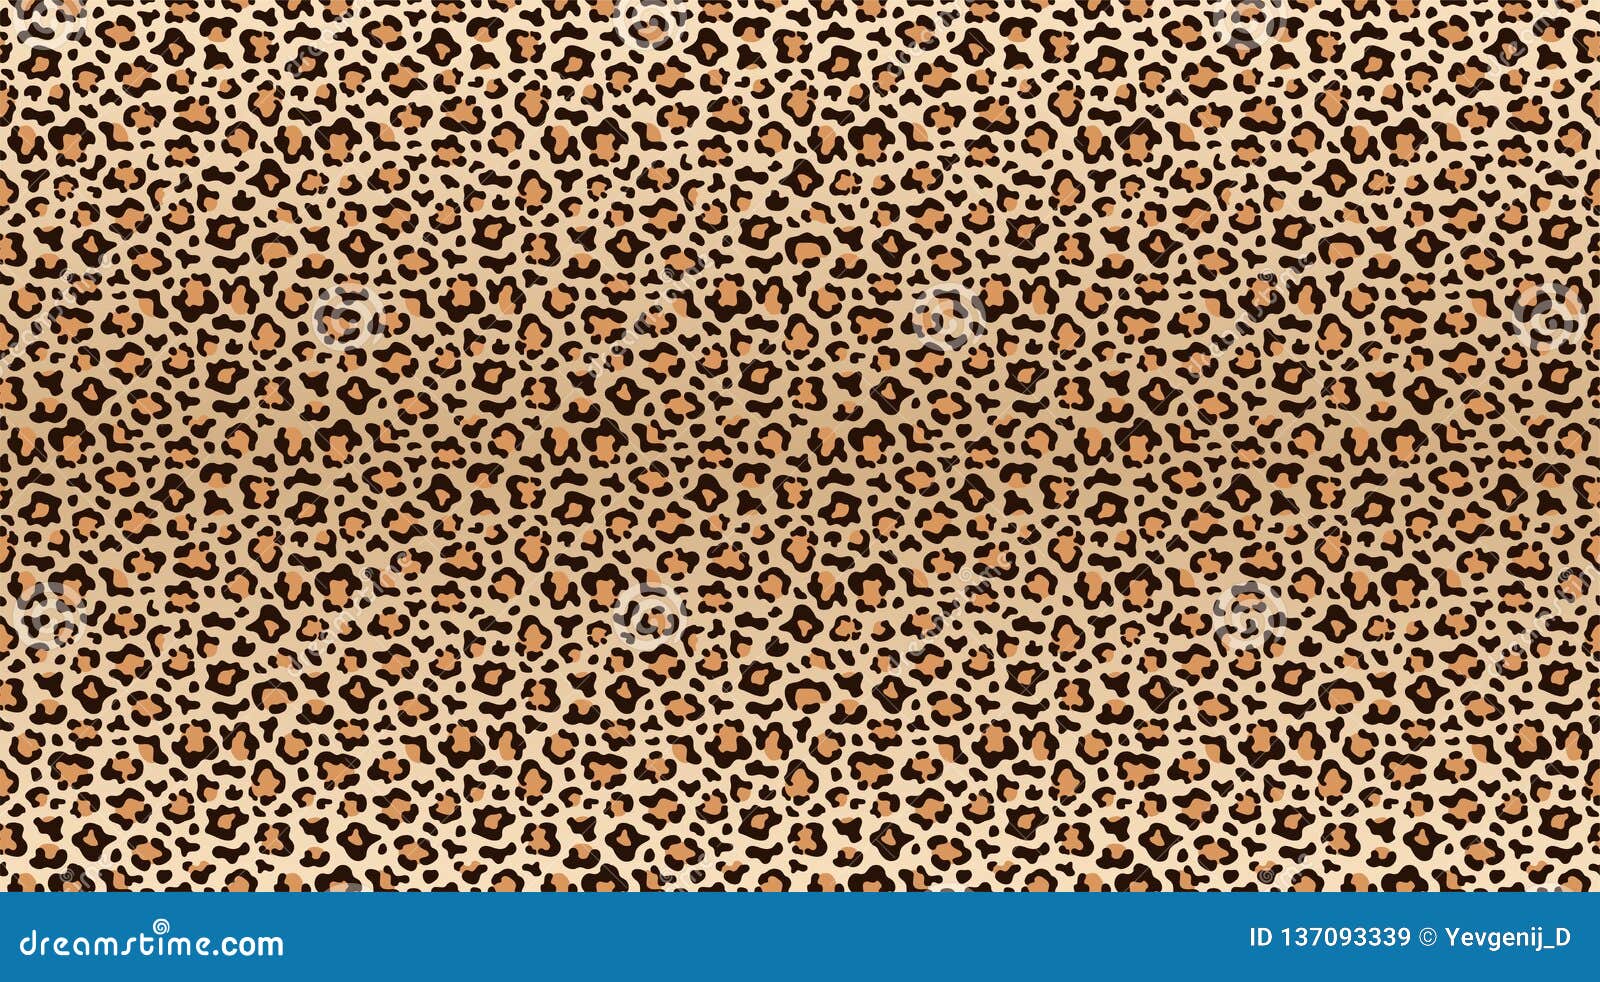 leopard print pattern. seamless pattern of leopard skin. fashionable cheetah fur texture